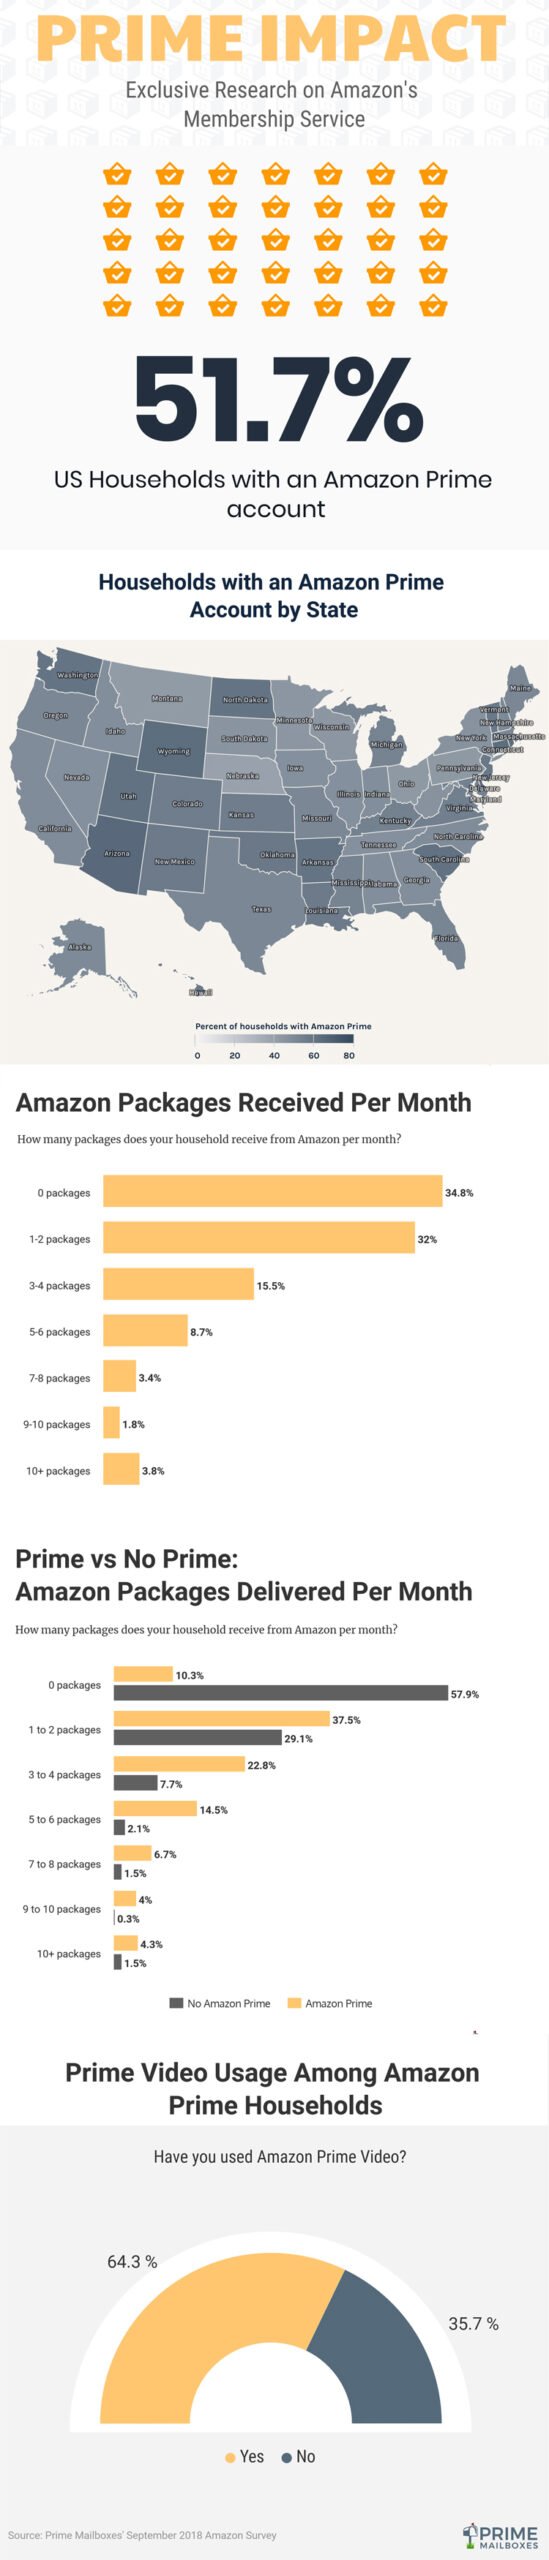 Amazon Prime Membership survey results